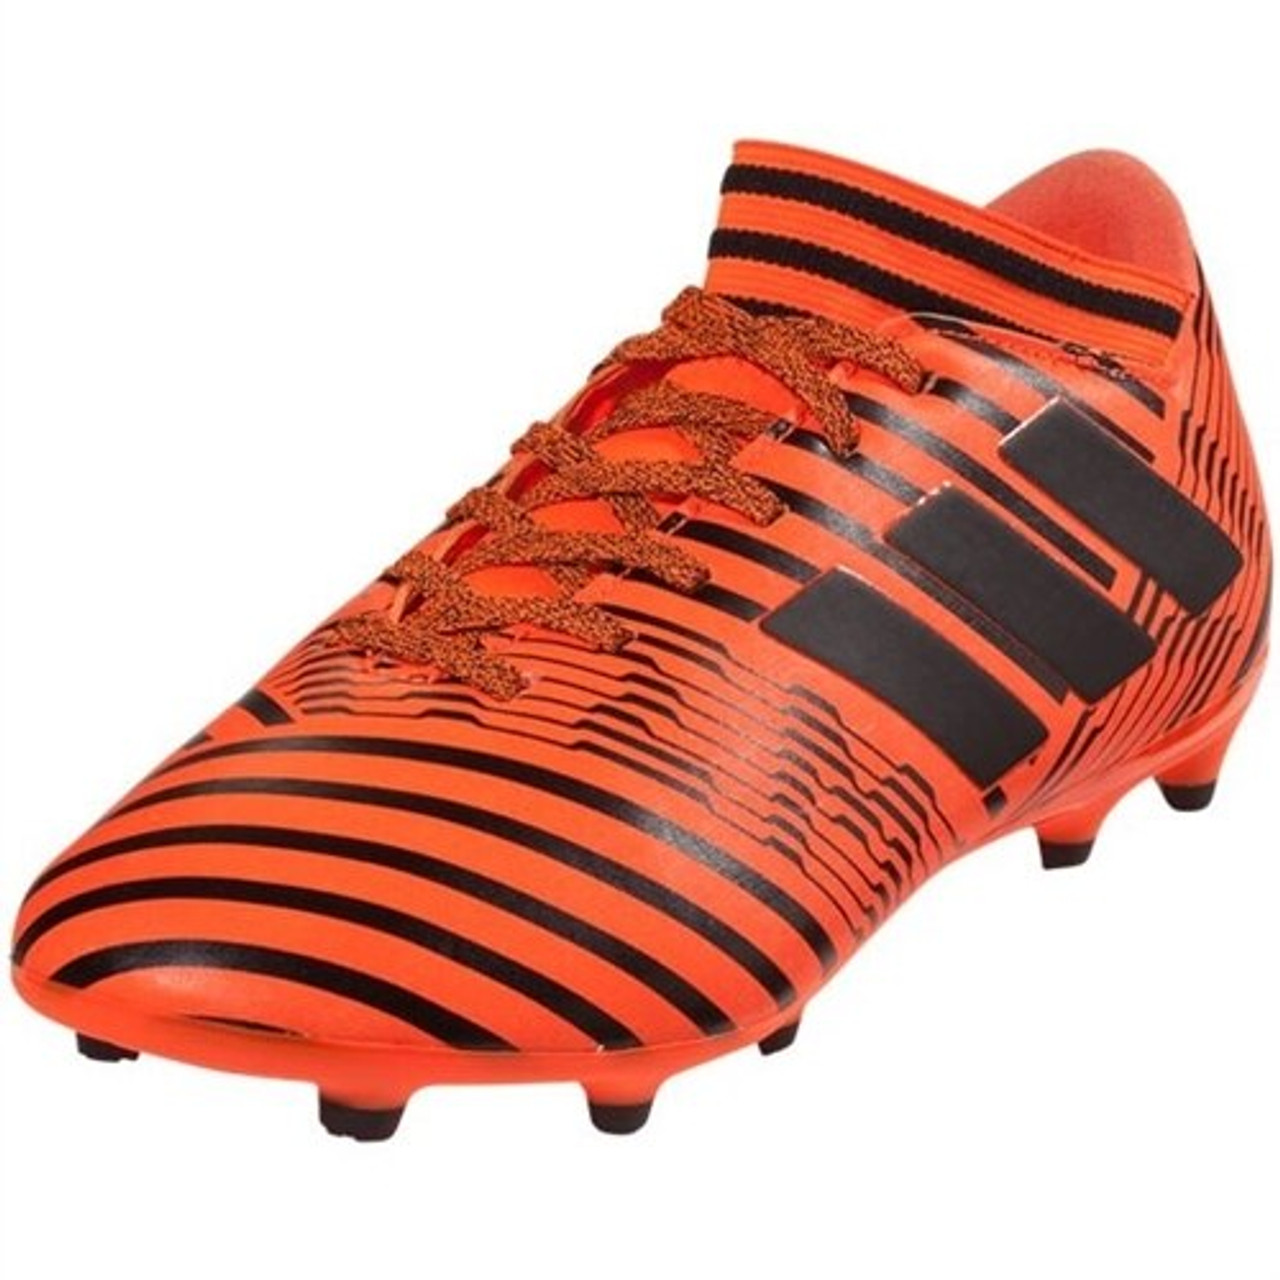 orange adidas soccer cleats